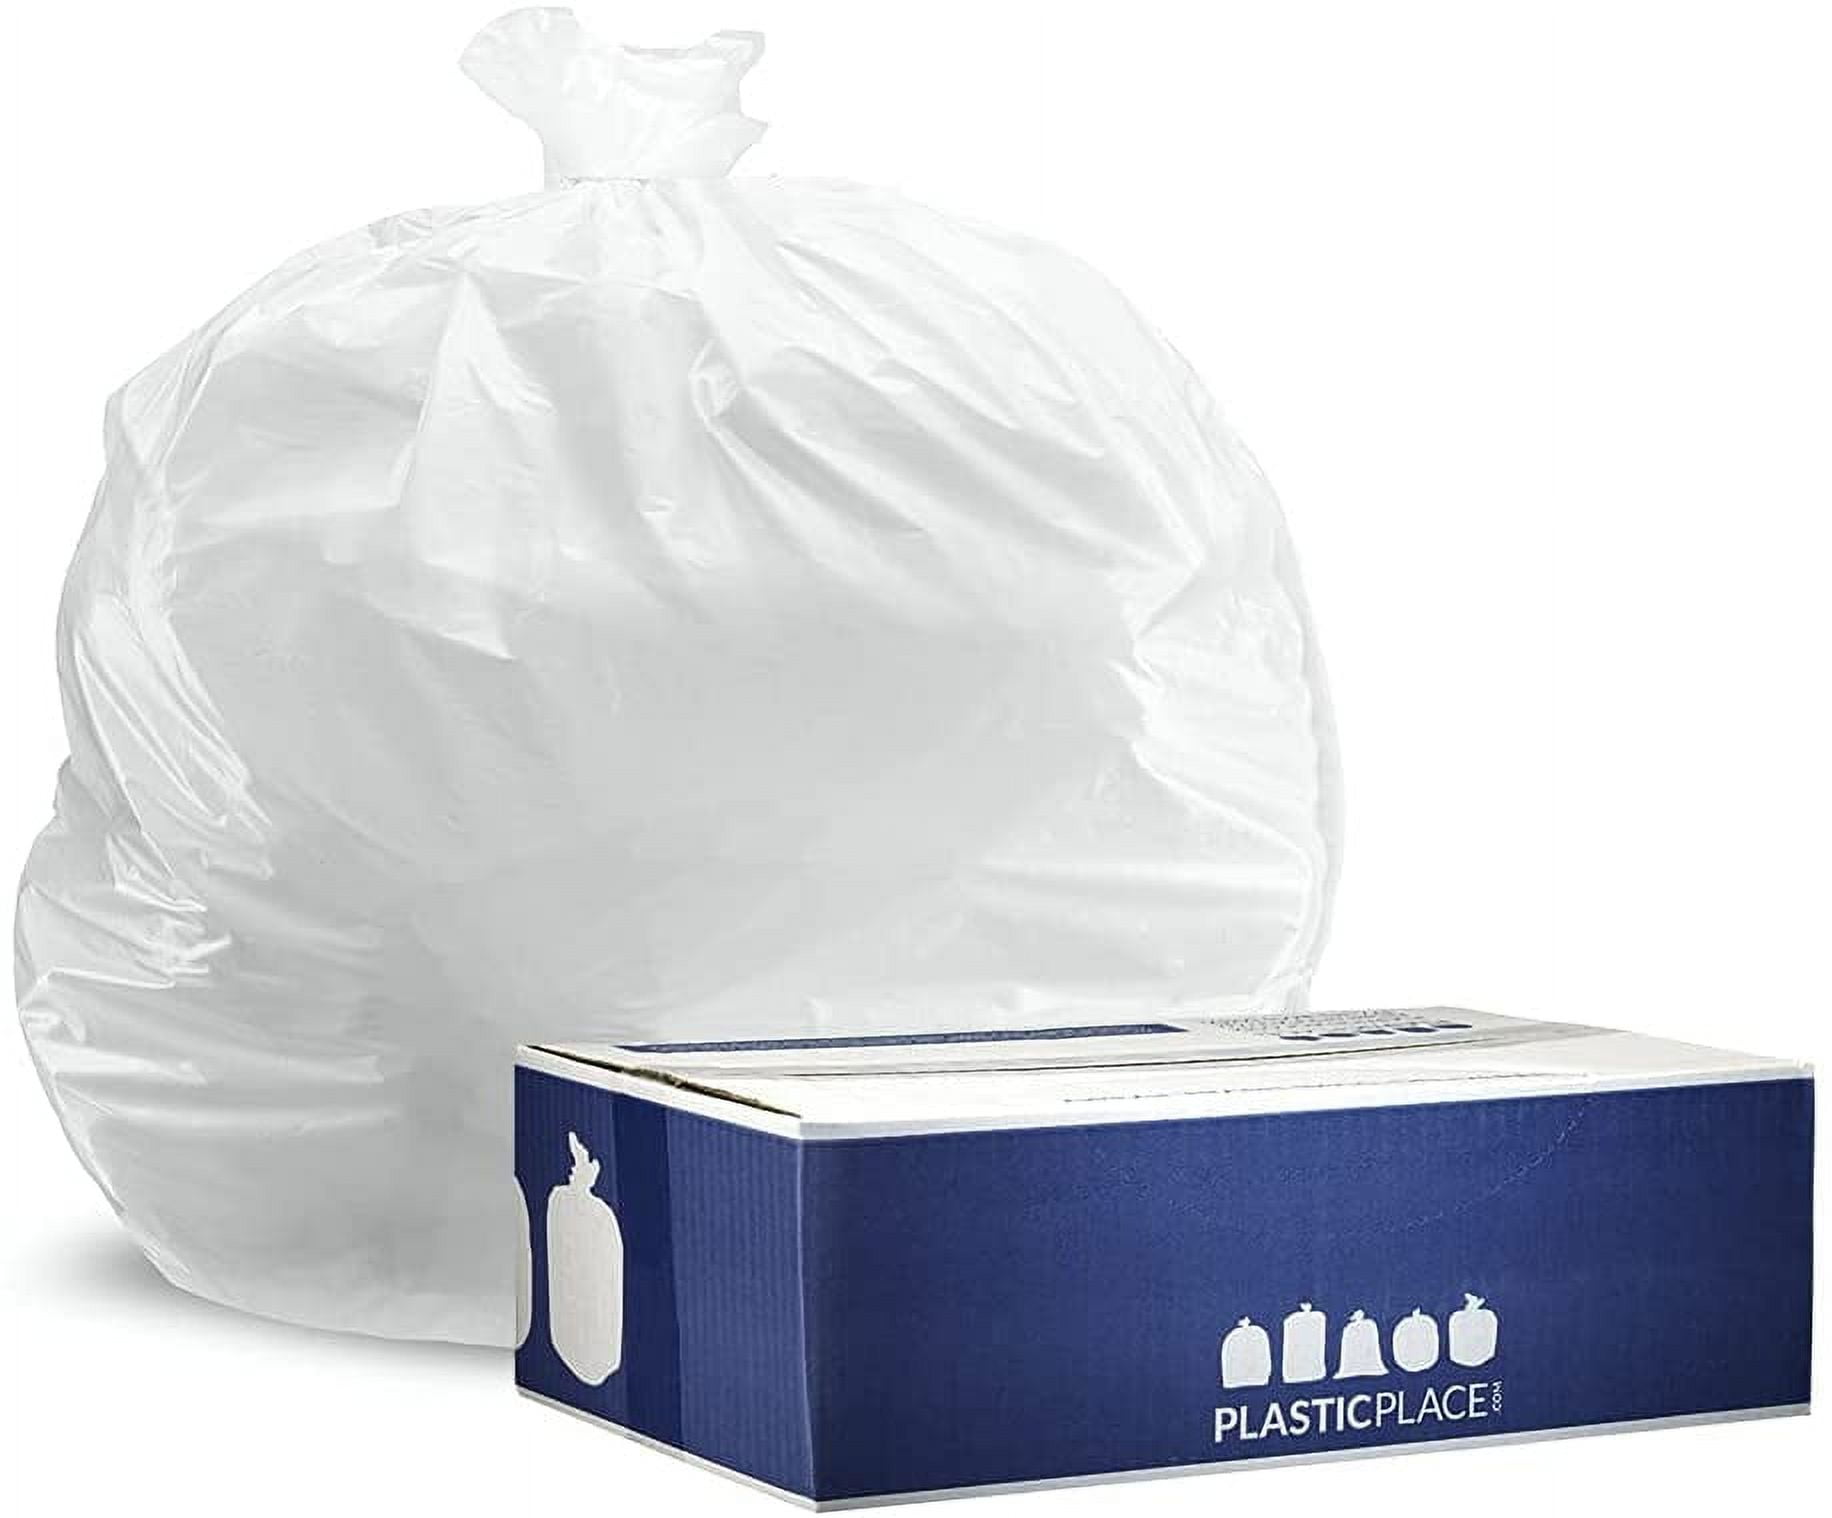  Plasticplace 12-16 Gallon Recycling Trash Bags │1.2